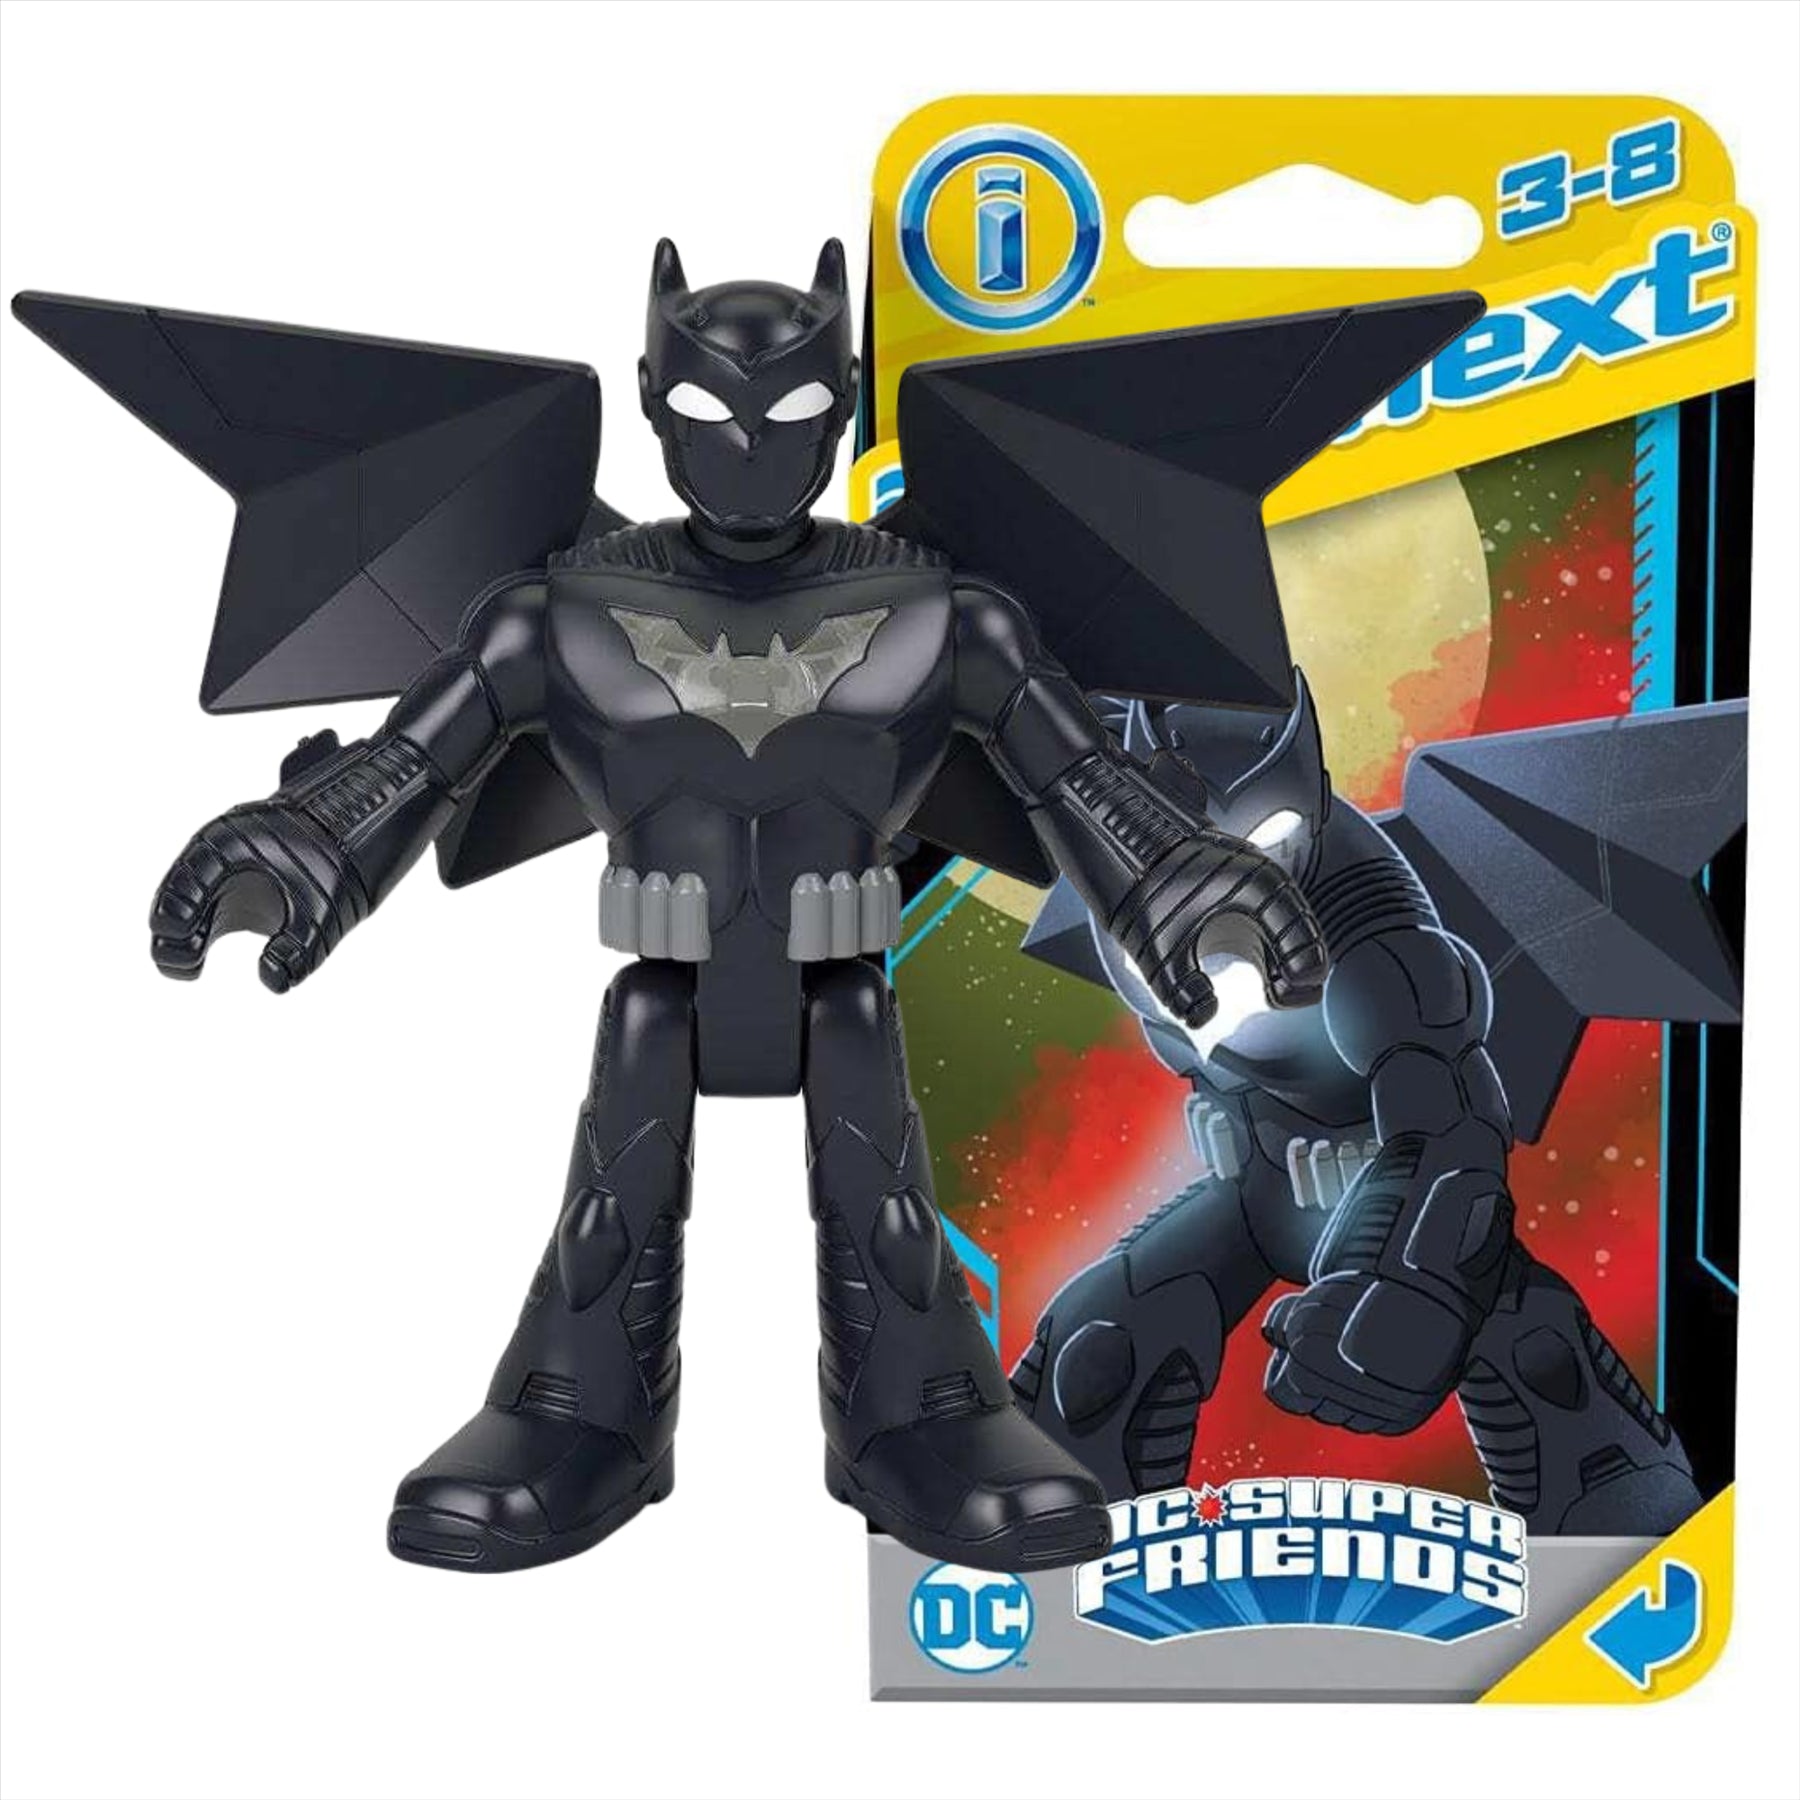 Imaginext DC Super Friends Batwing Miniature Action Figure Play Toy